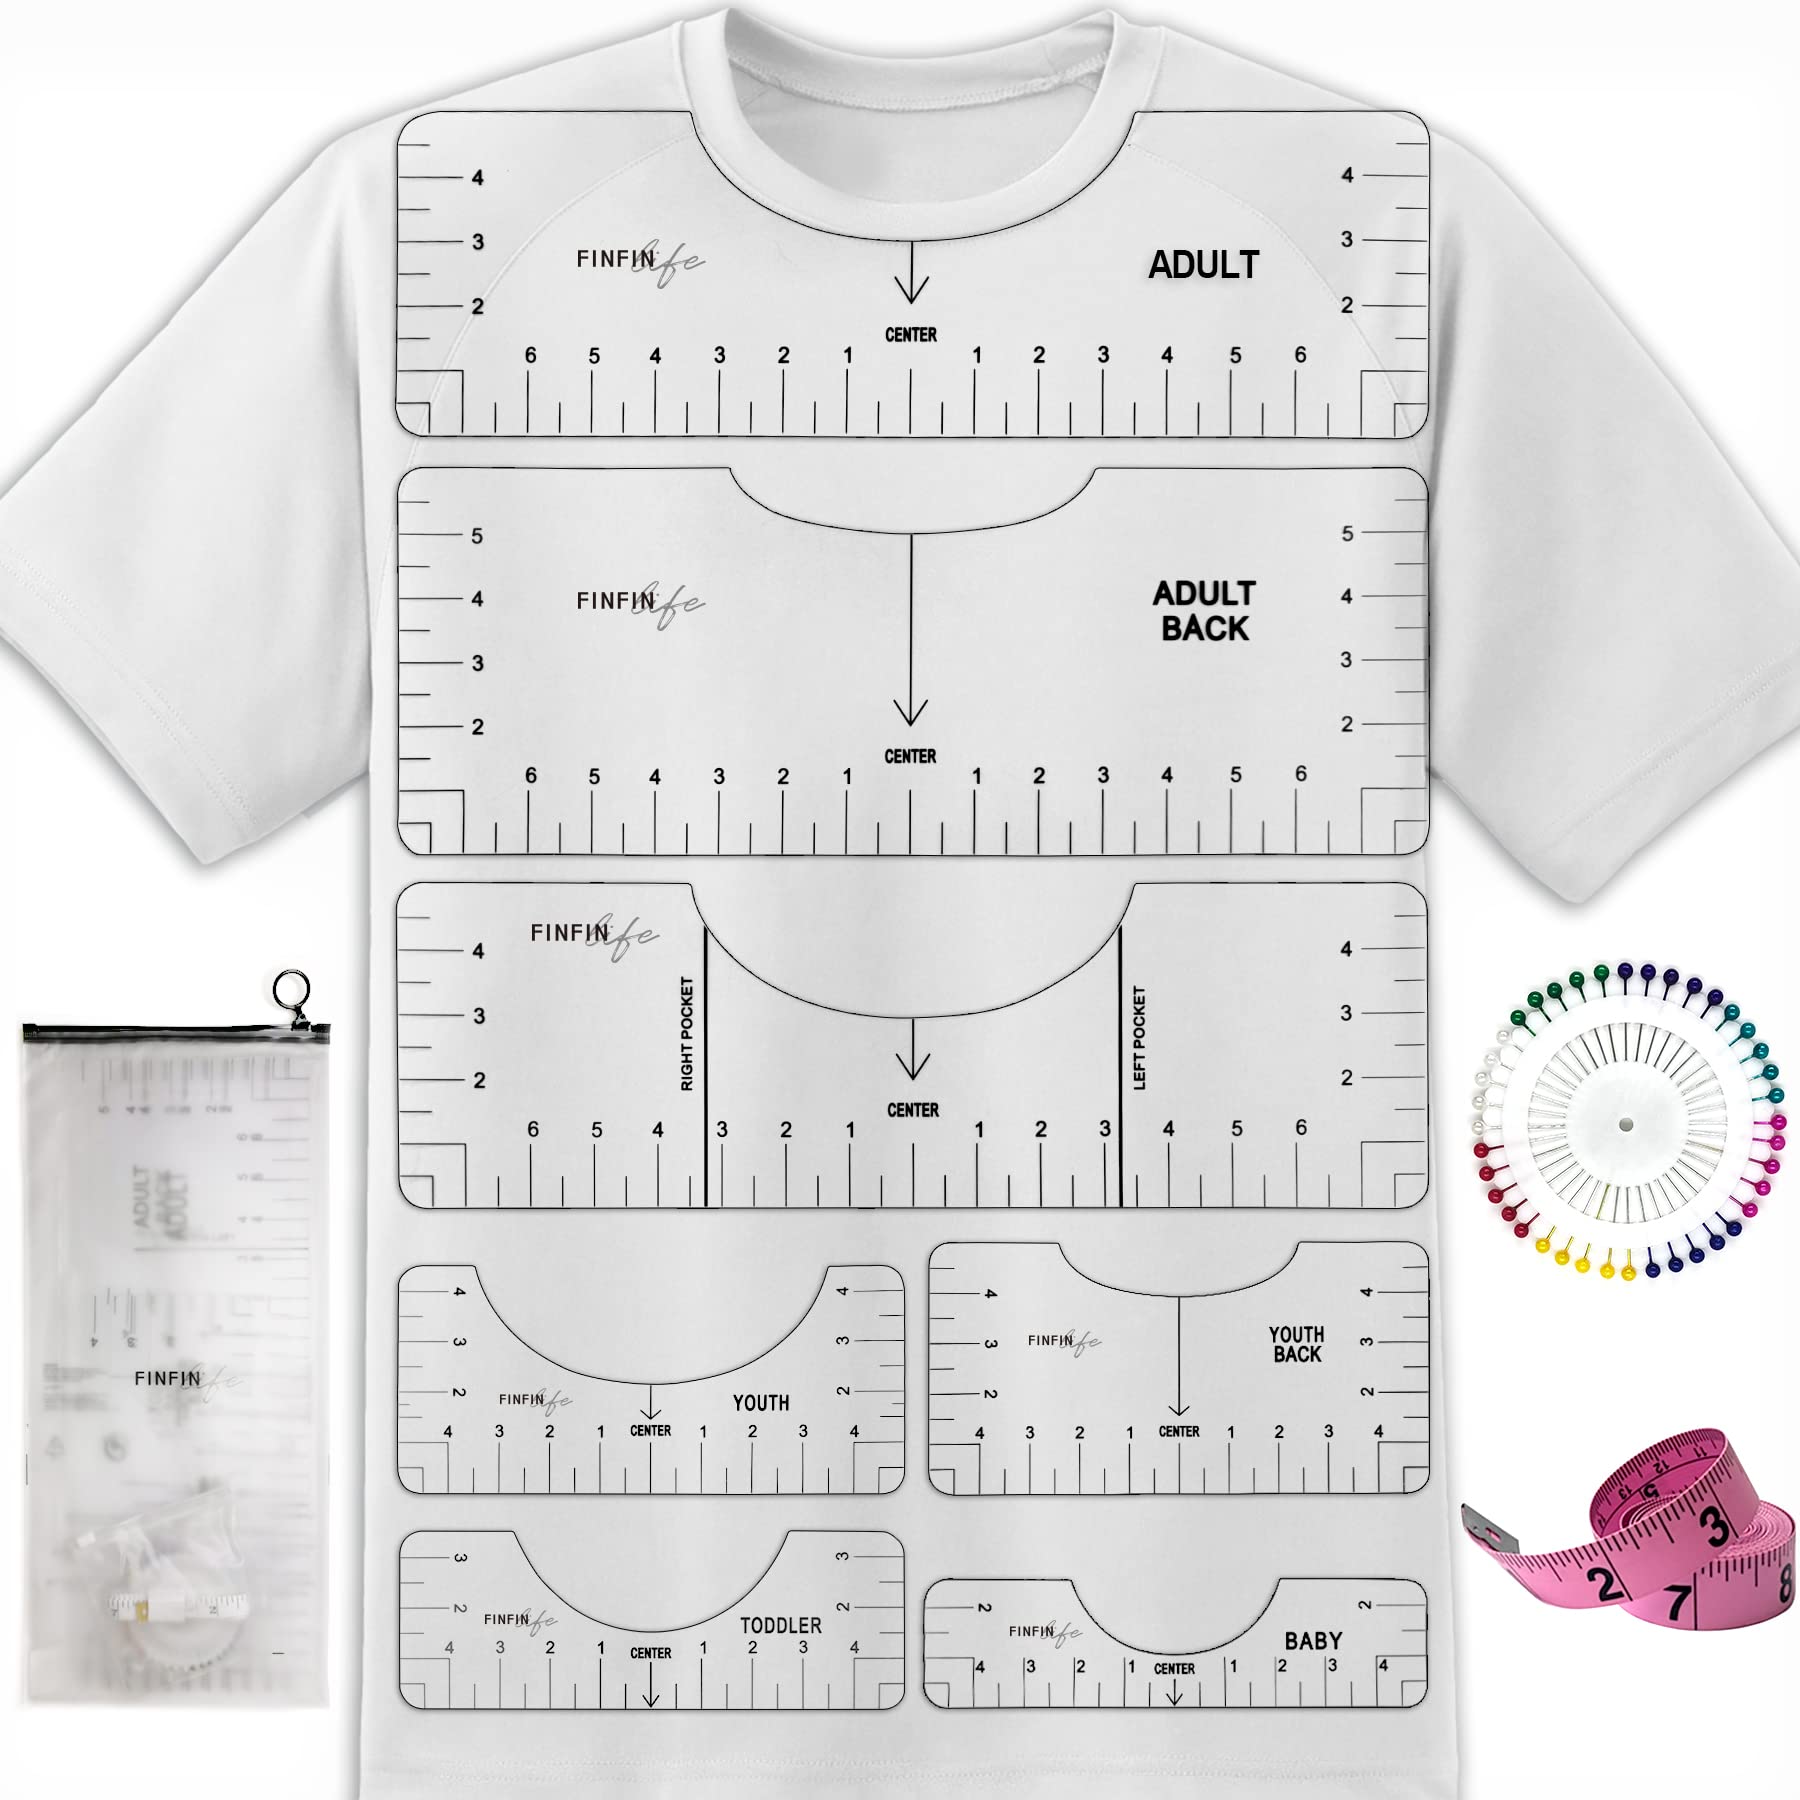 Tshirt Ruler Guide for Vinyl Alignment, T Shirt Rulers to Center